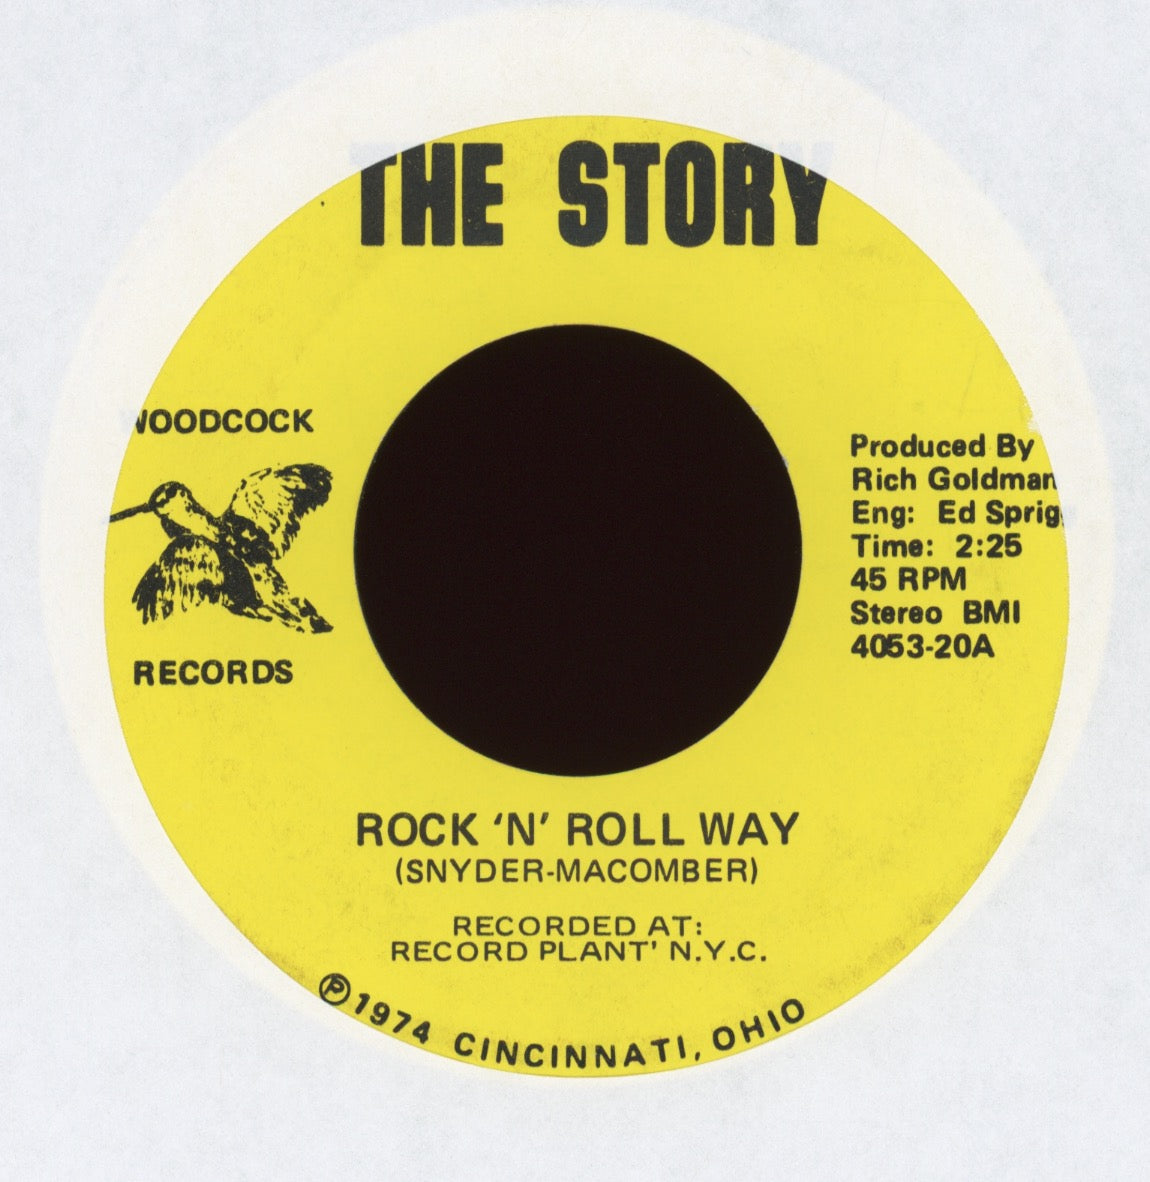 The Story - Rock 'N' Roll Way on Woodcock AOR 45